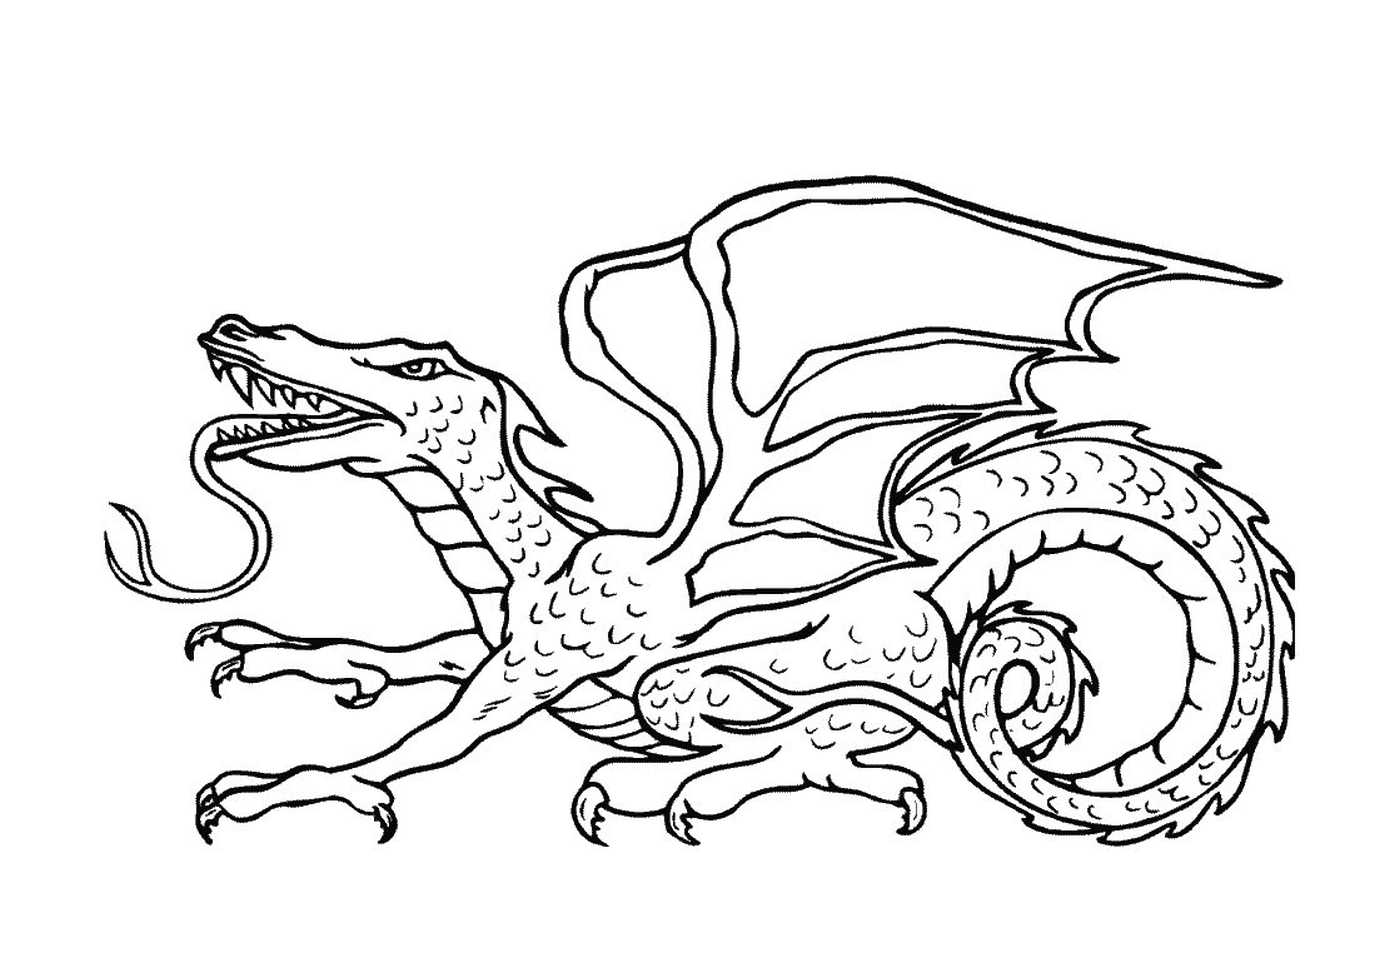   Un dragon adulte 